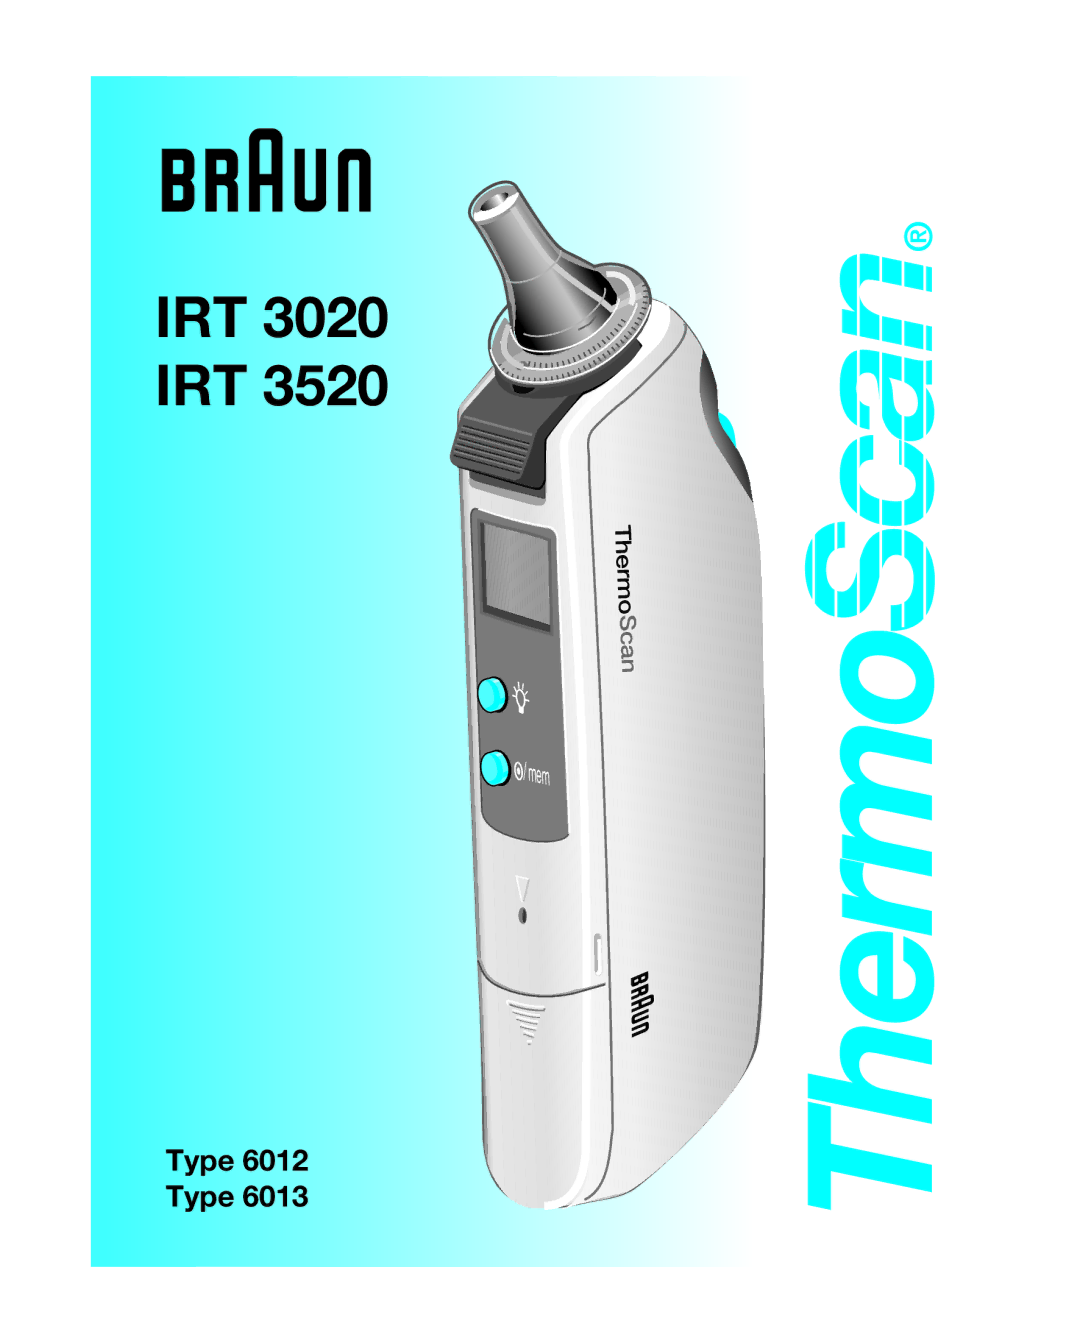 Braun IRT 3520, IRT 3020 manual ThermoScan 